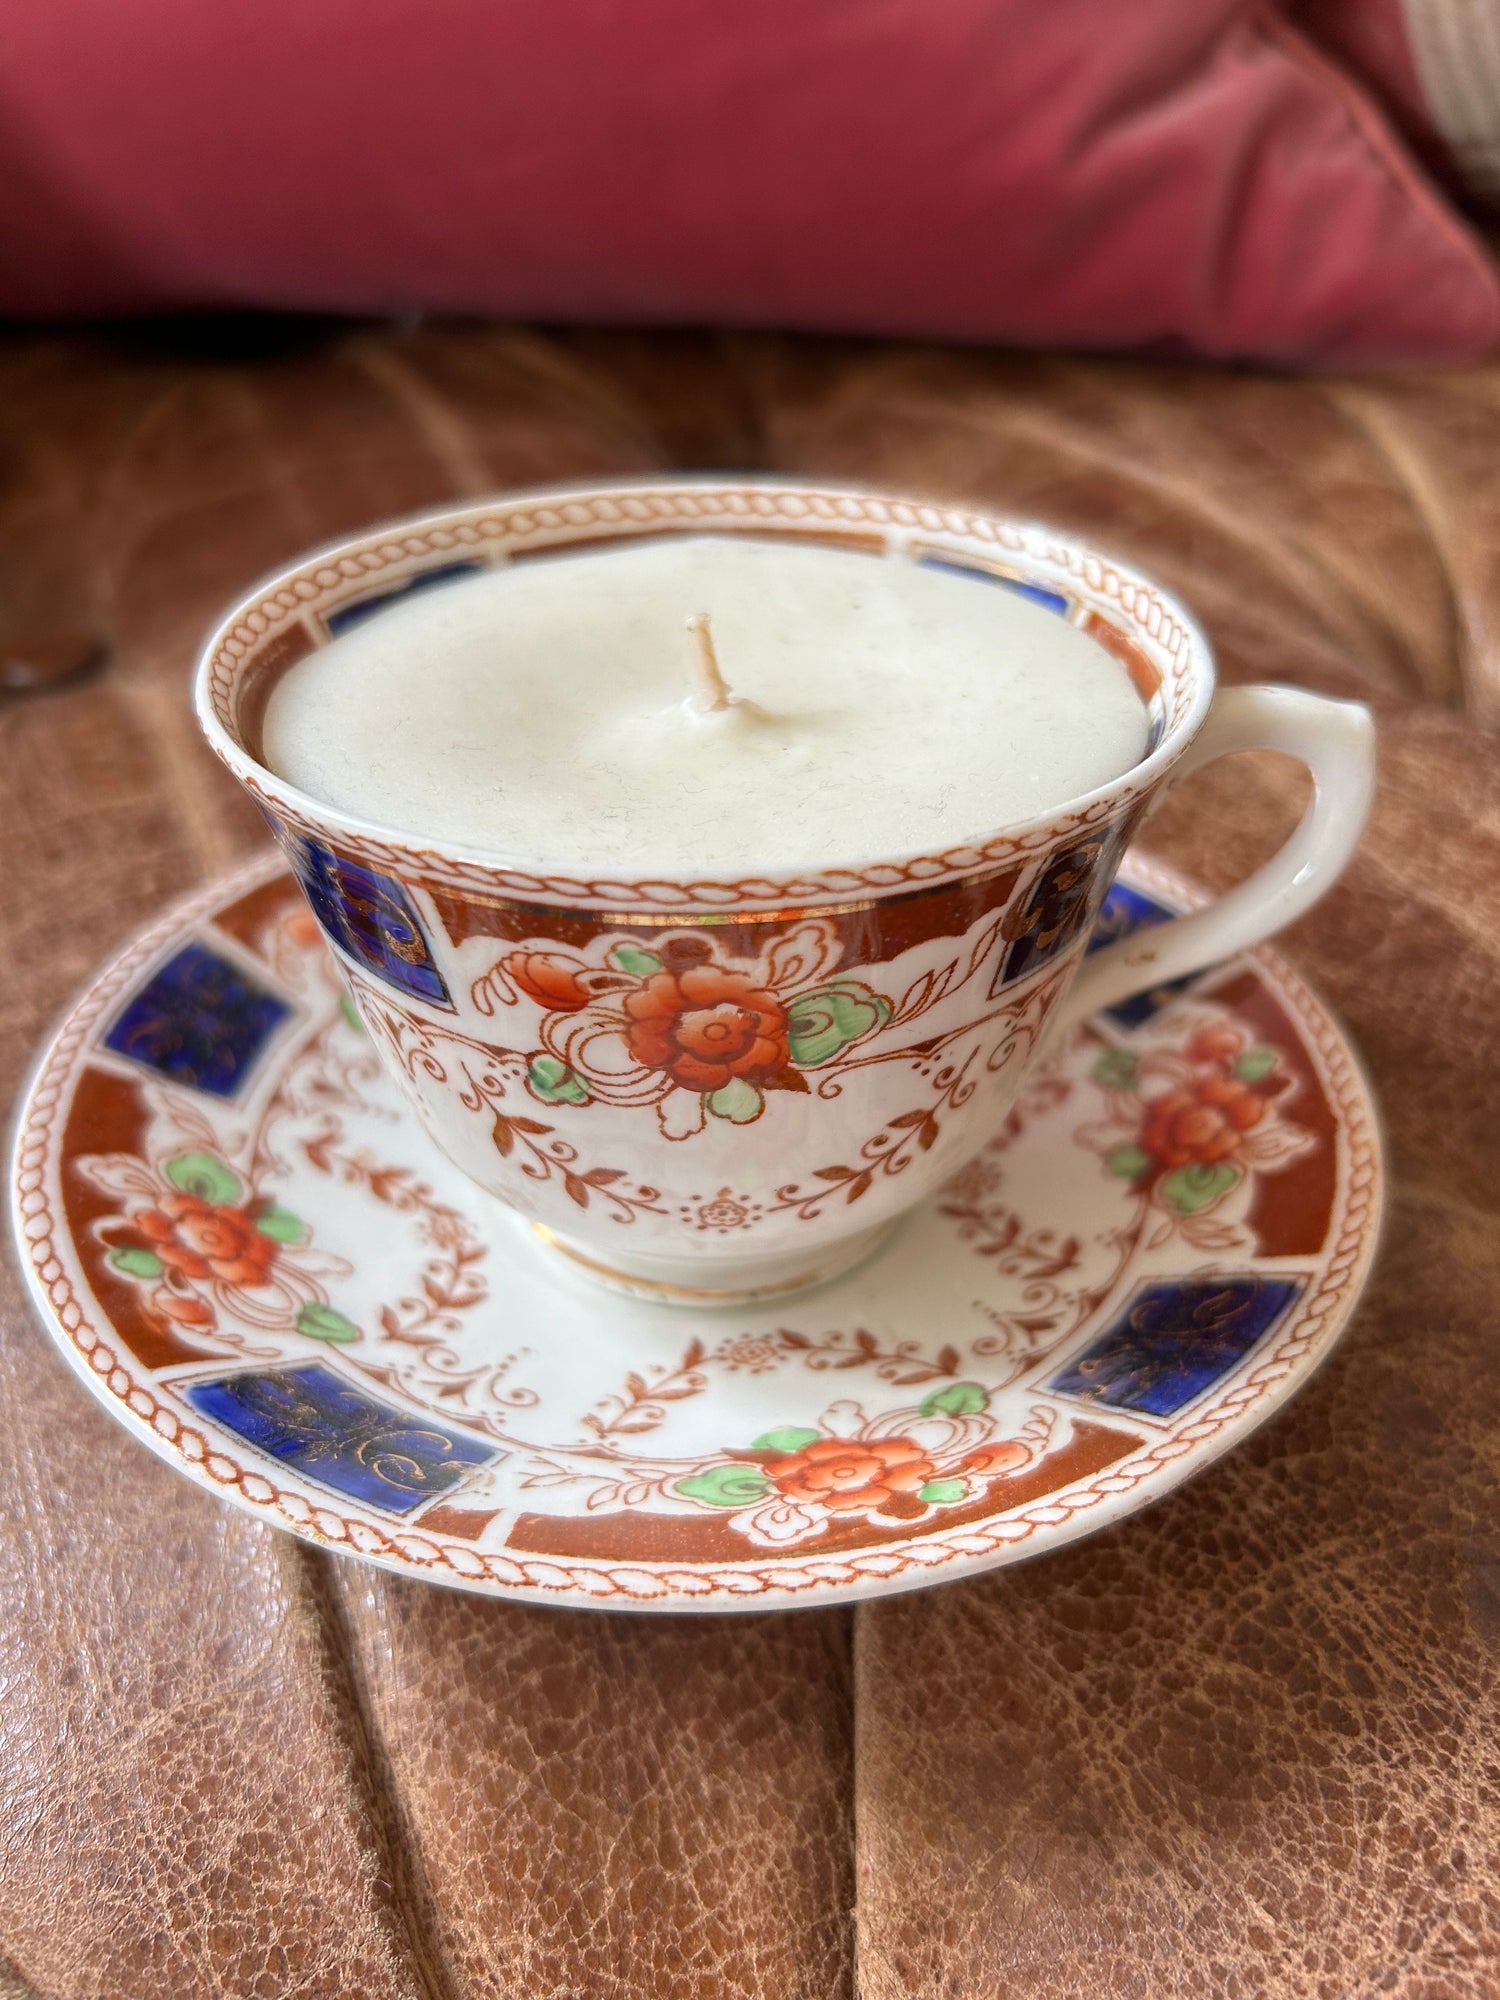 Vintage  China  tea-sets  & vntage china  - scented candles